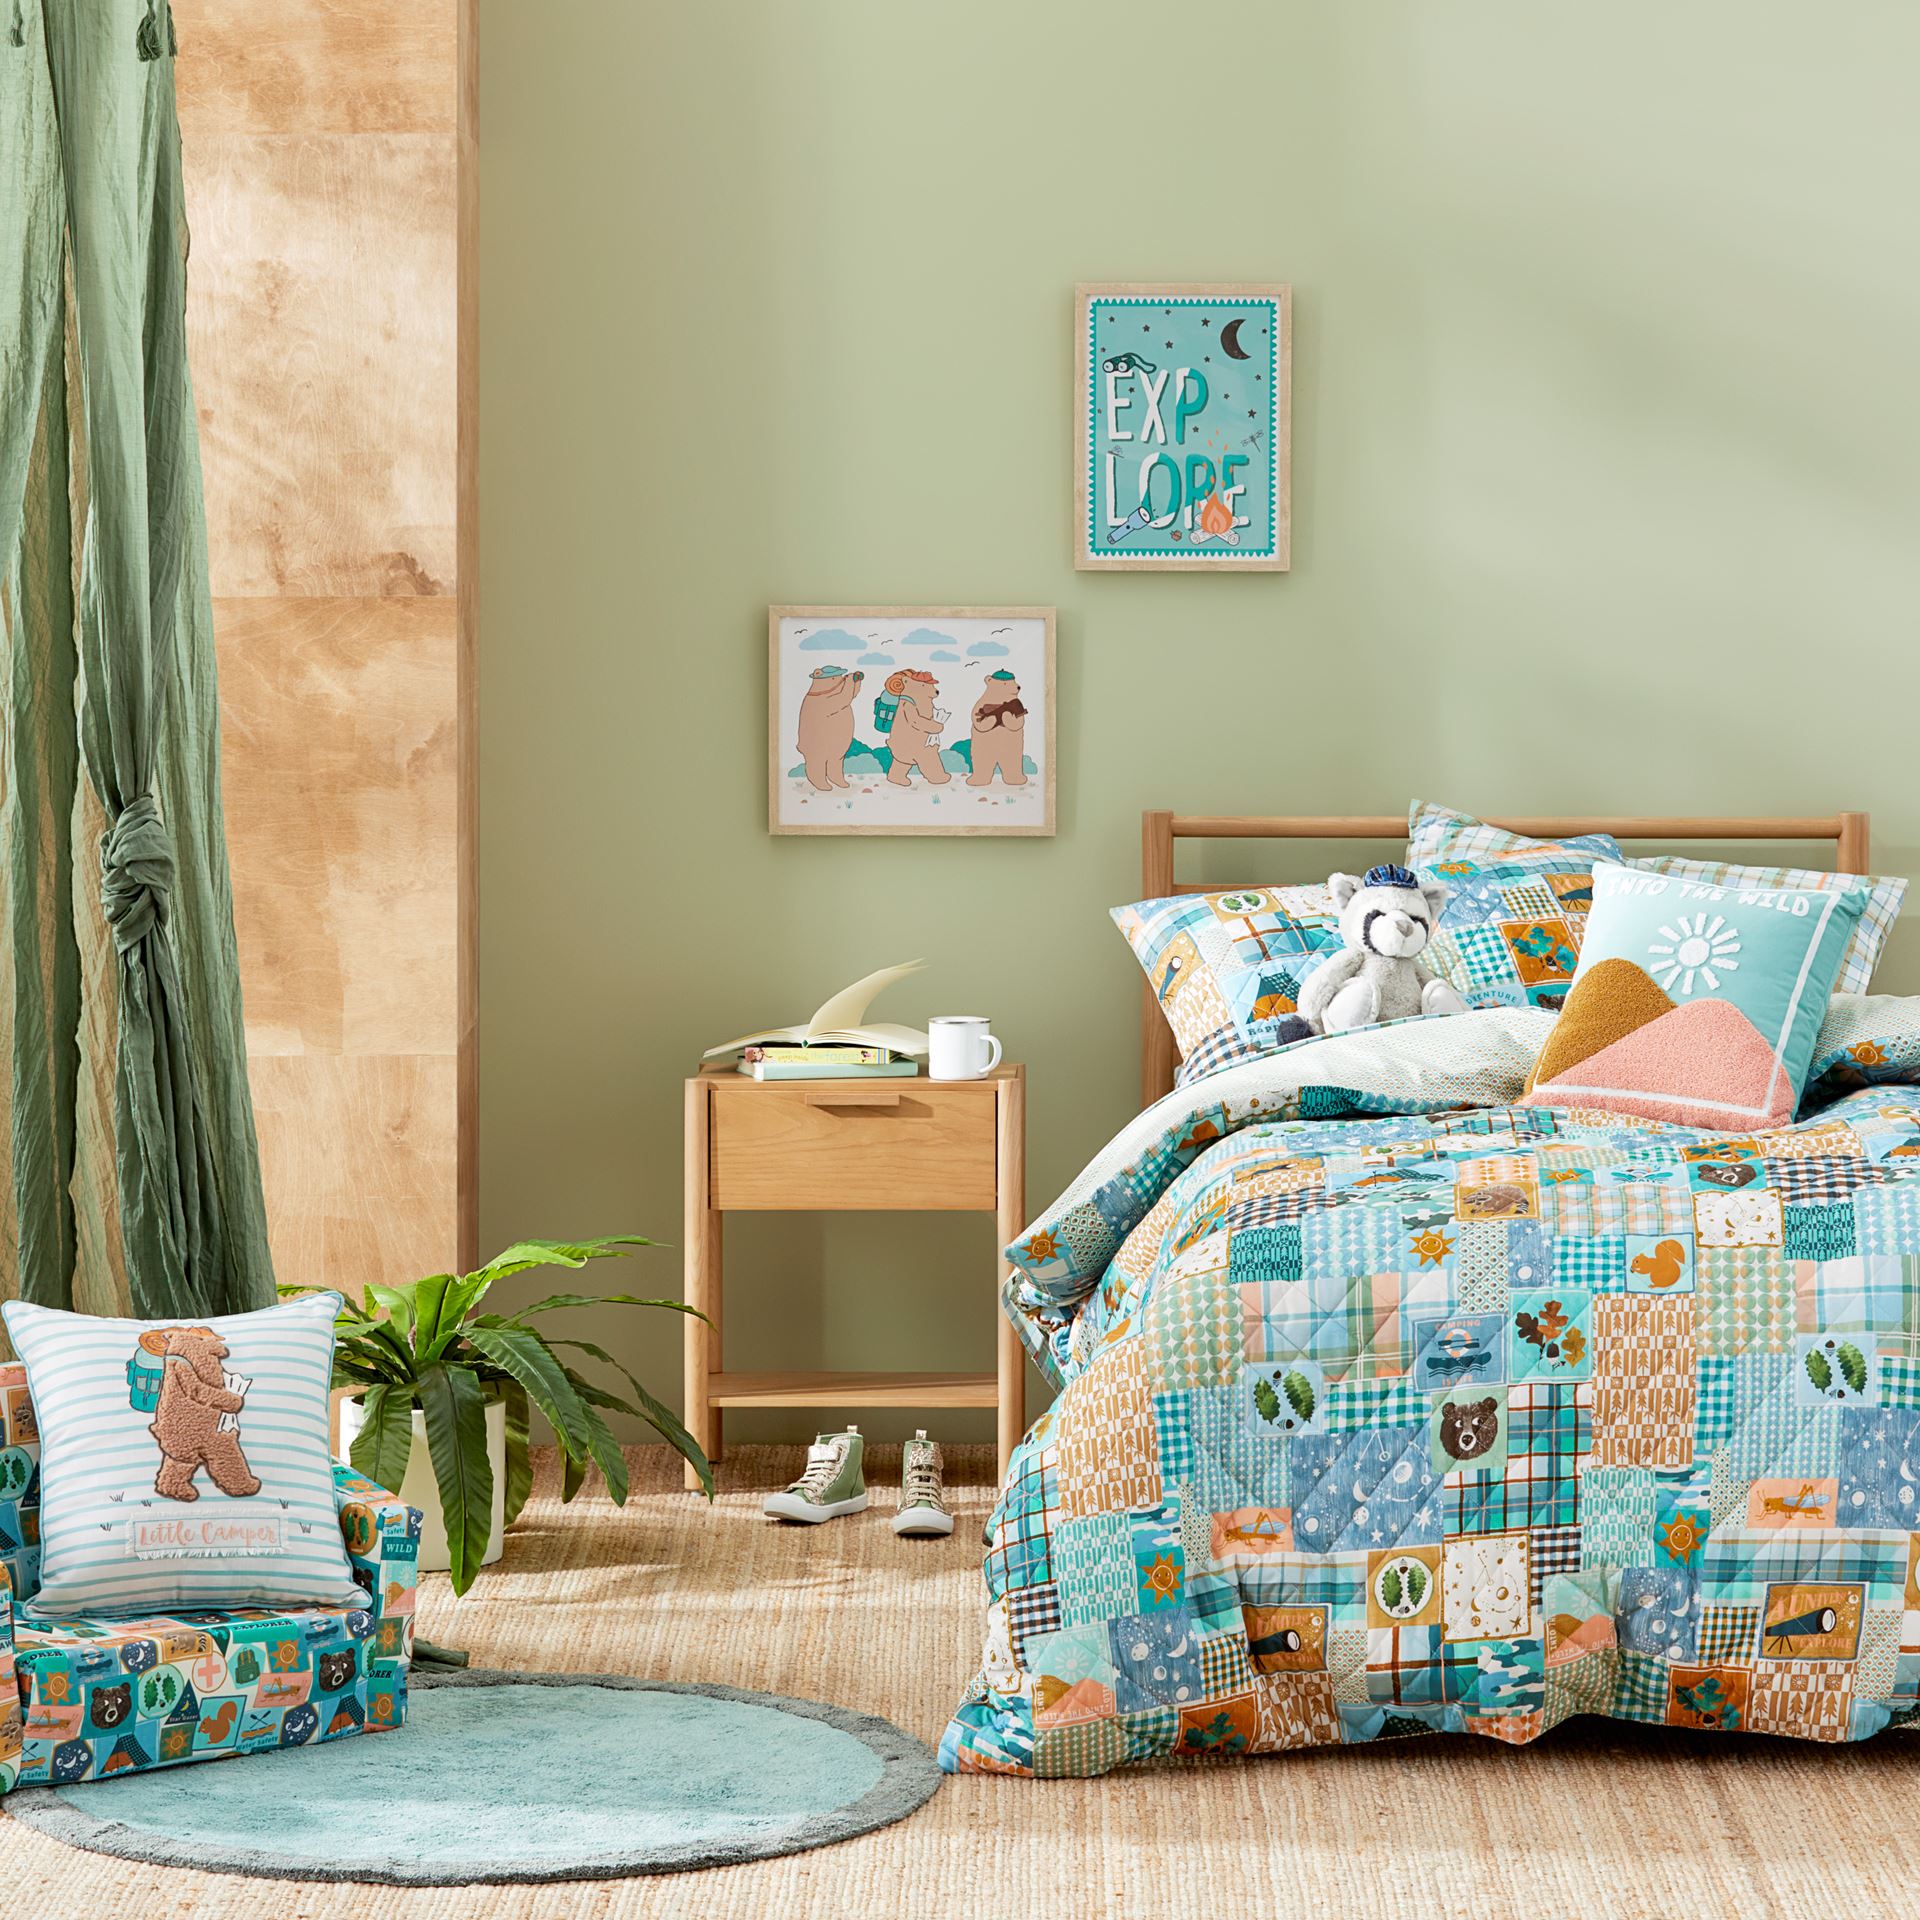 Quilt Clips - Bedroom - Quilts - Adairs Online